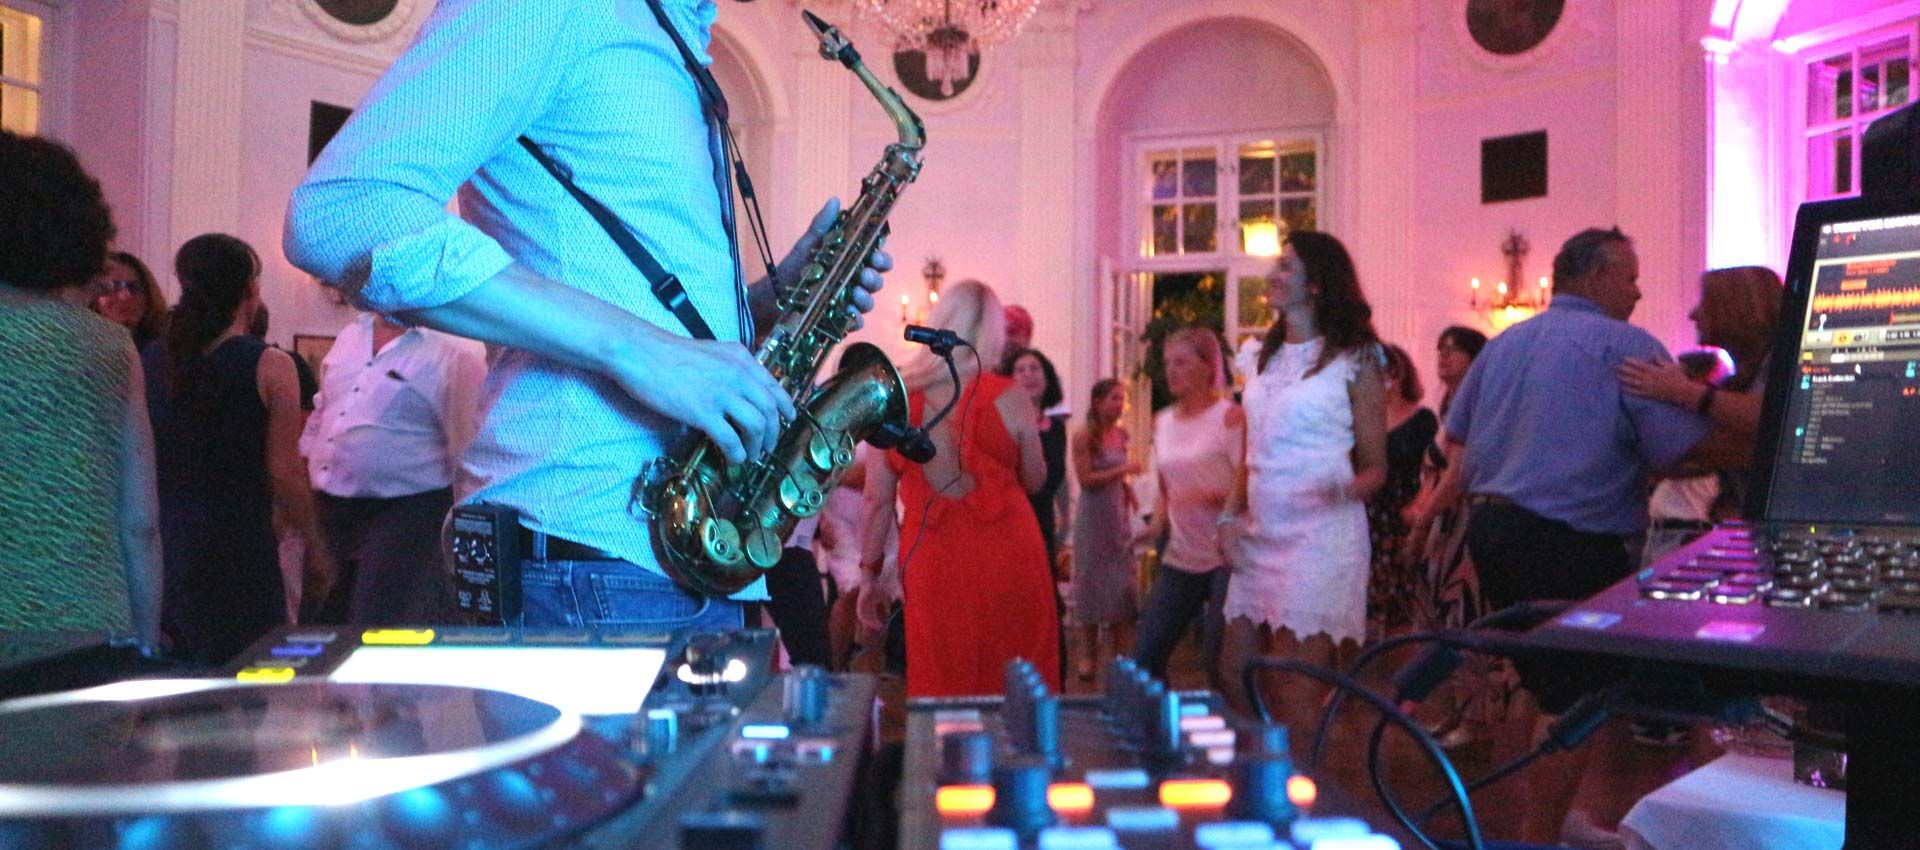 DJ Saxophon Party Lusthaus Prater Wien